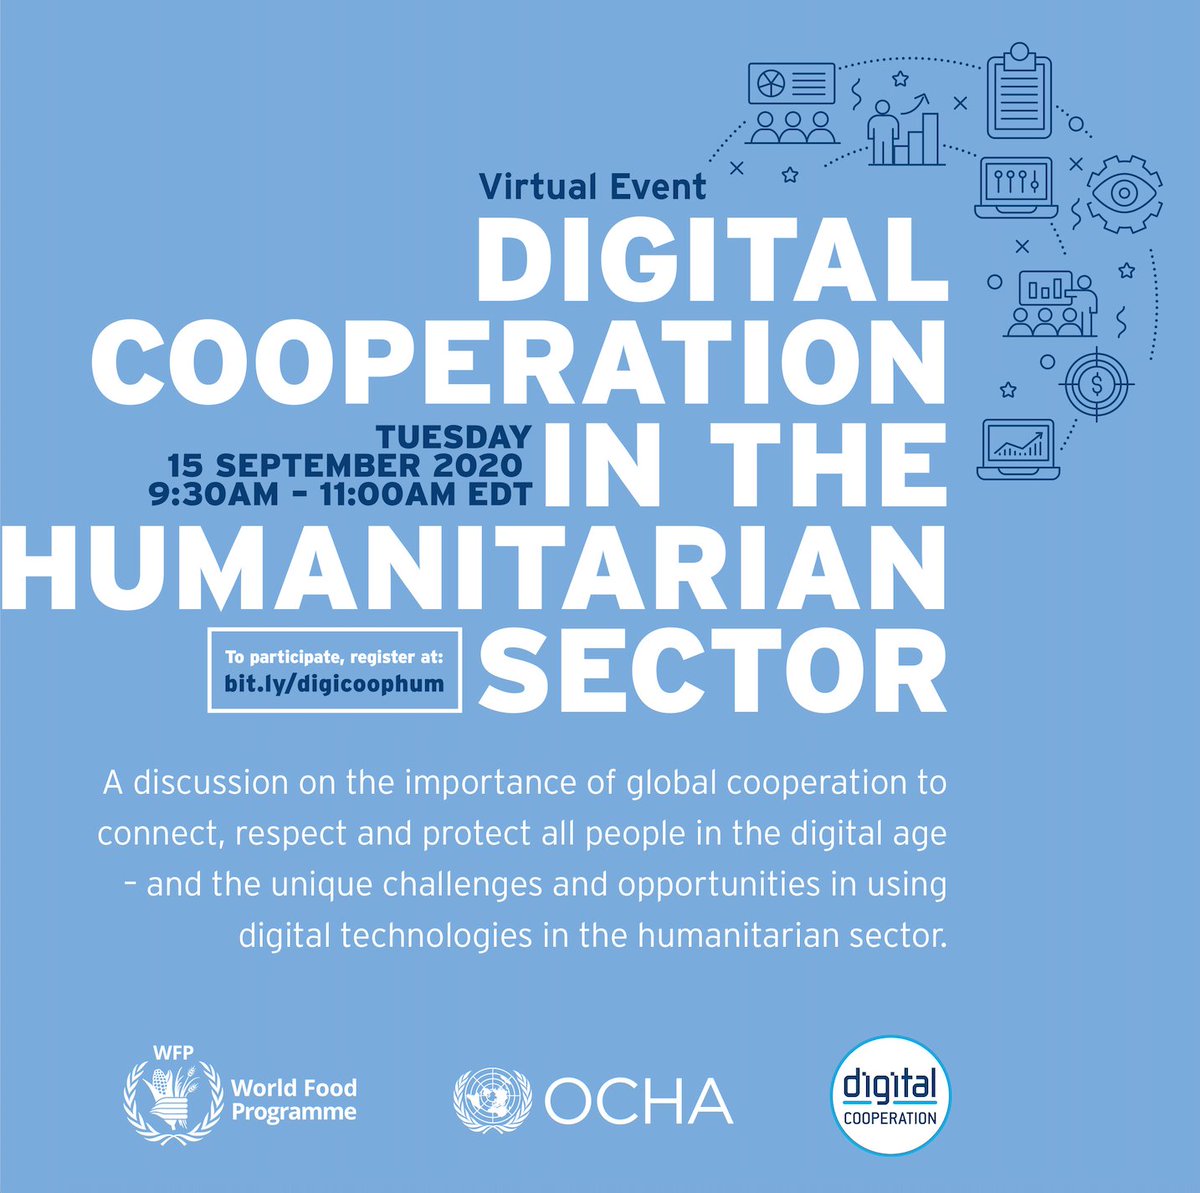 Join @UNSGdigicoop, @humdata, @UNOCHA, @WFP, @HochschildF, @Googleorg & us for a conversation on #DigitalCooperation in the Humanitarian Sector.

📅 Tuesday, 15 September @ 13:30 GMT
Register here: bit.ly/digicoophum